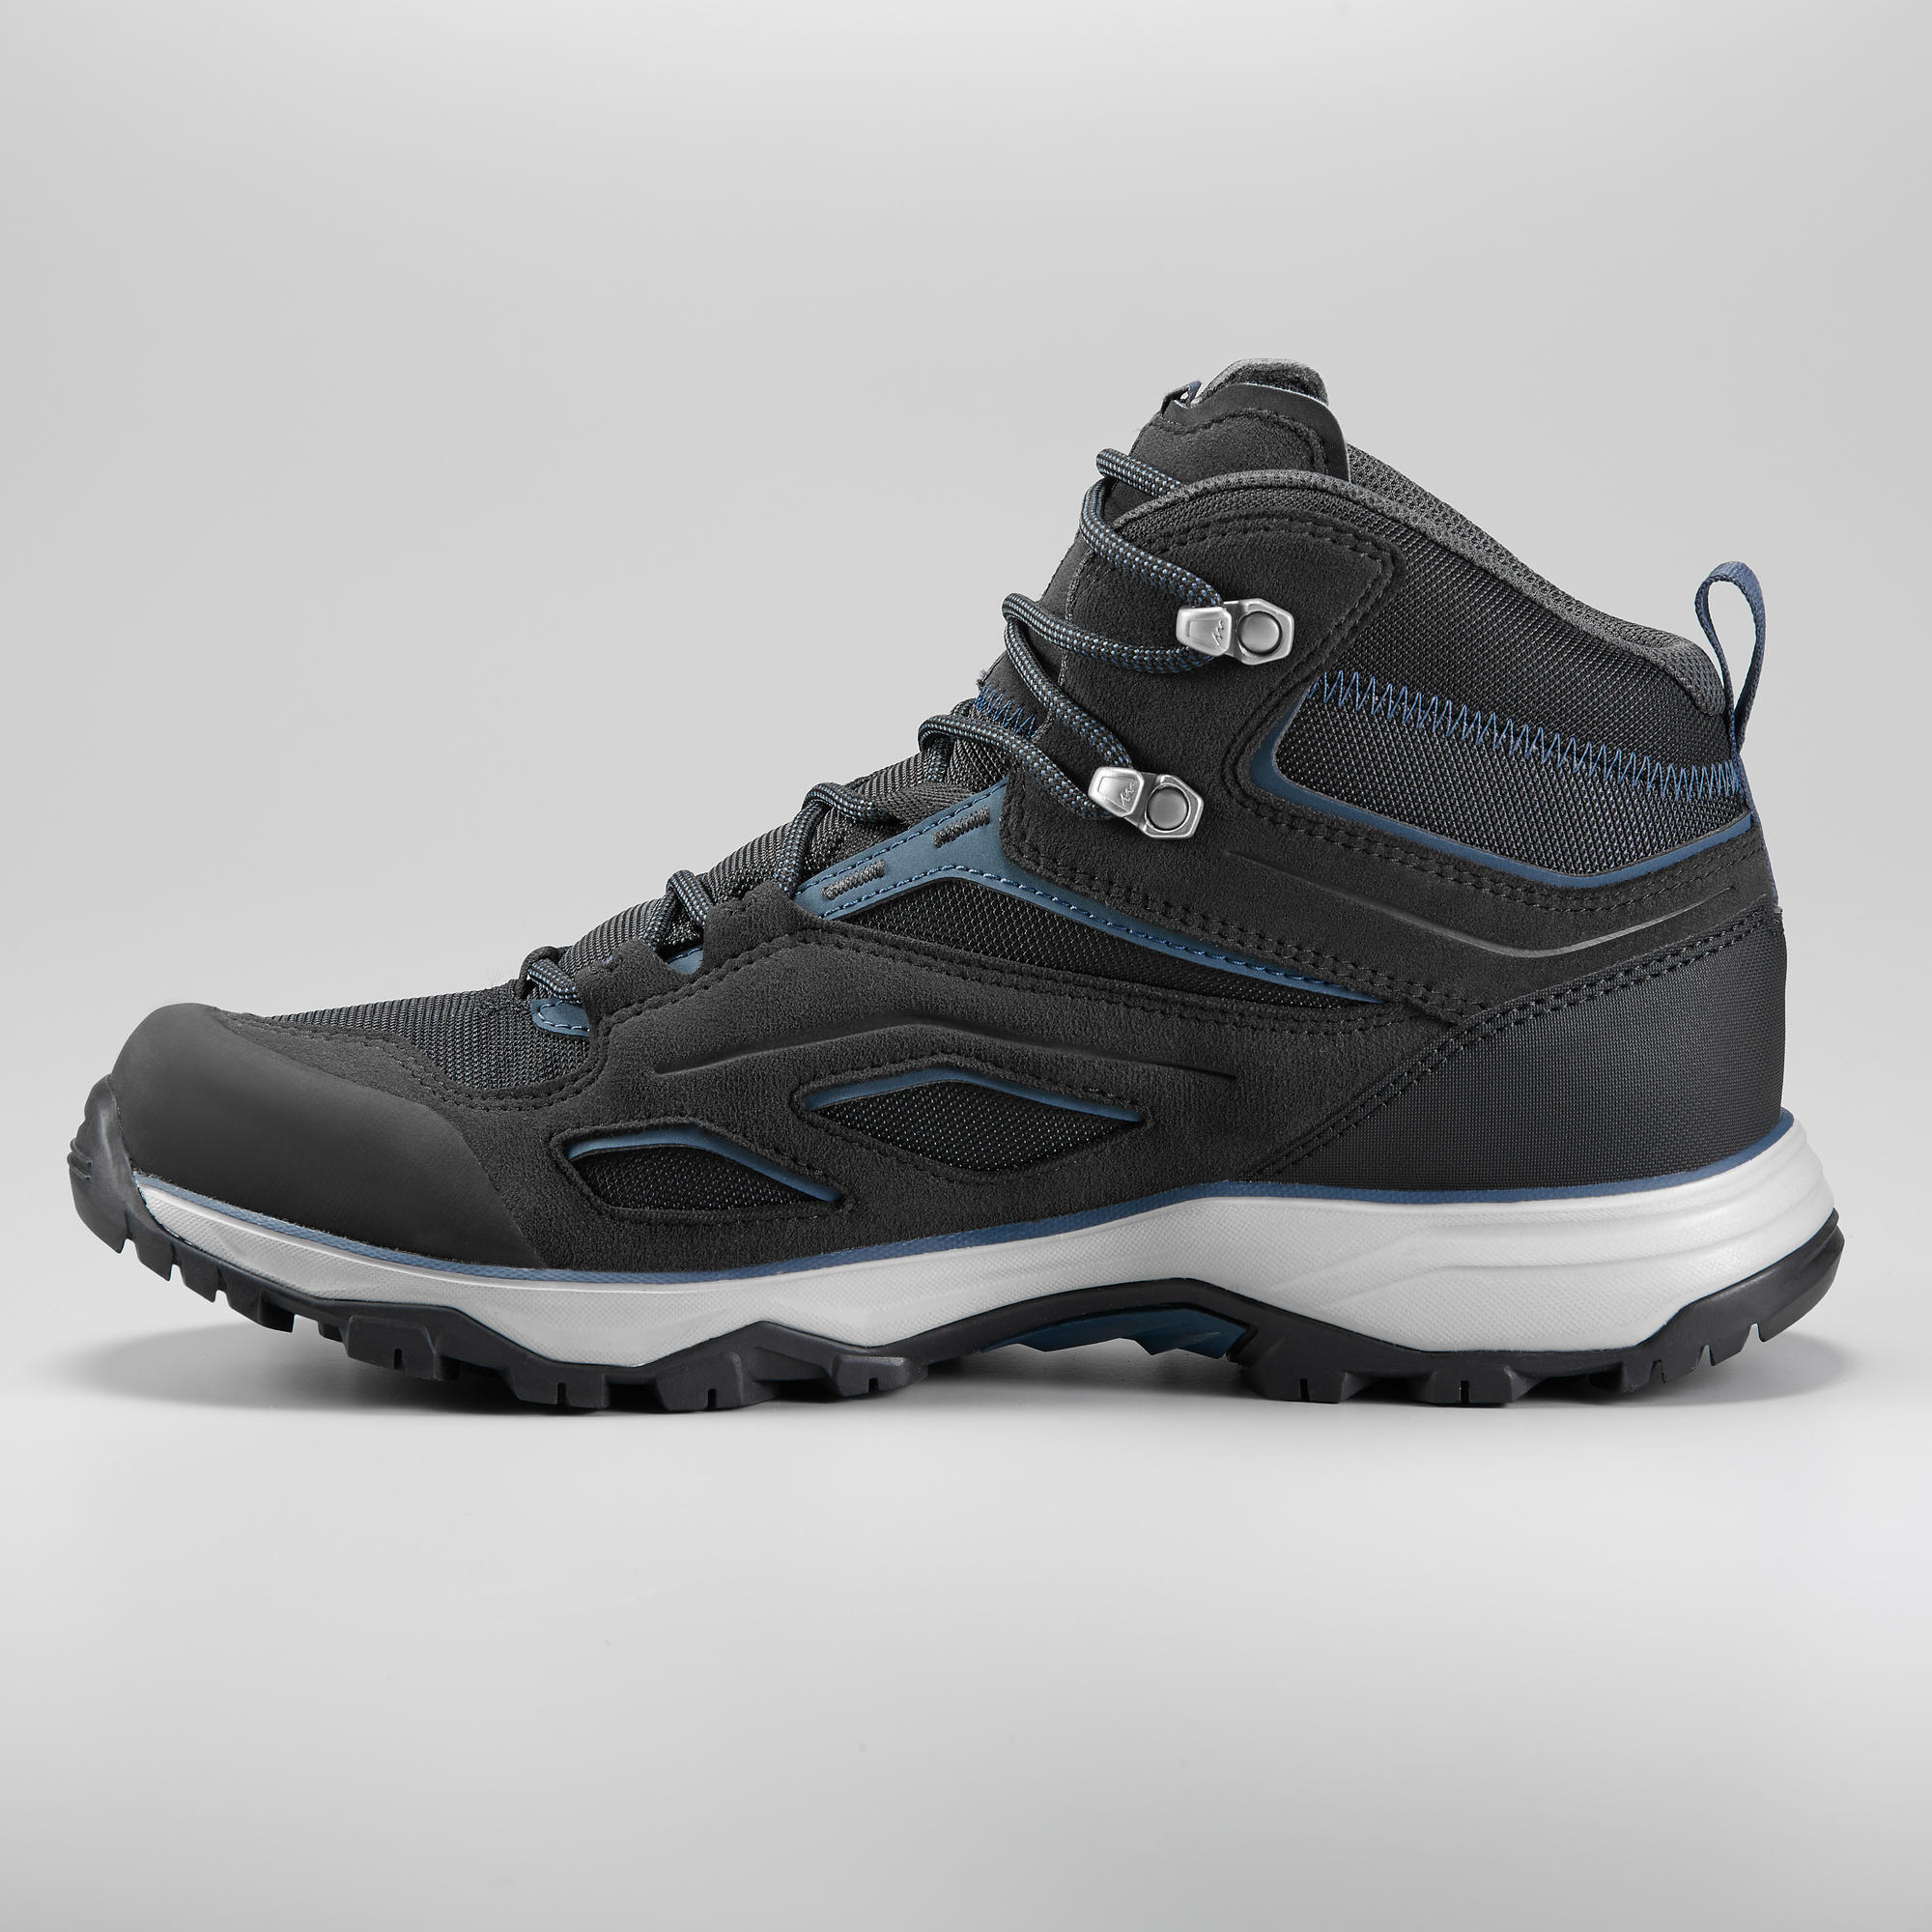 Men's Waterproof Mountain Walking Boot-Shoes - MH100 Mid - Black 2/6